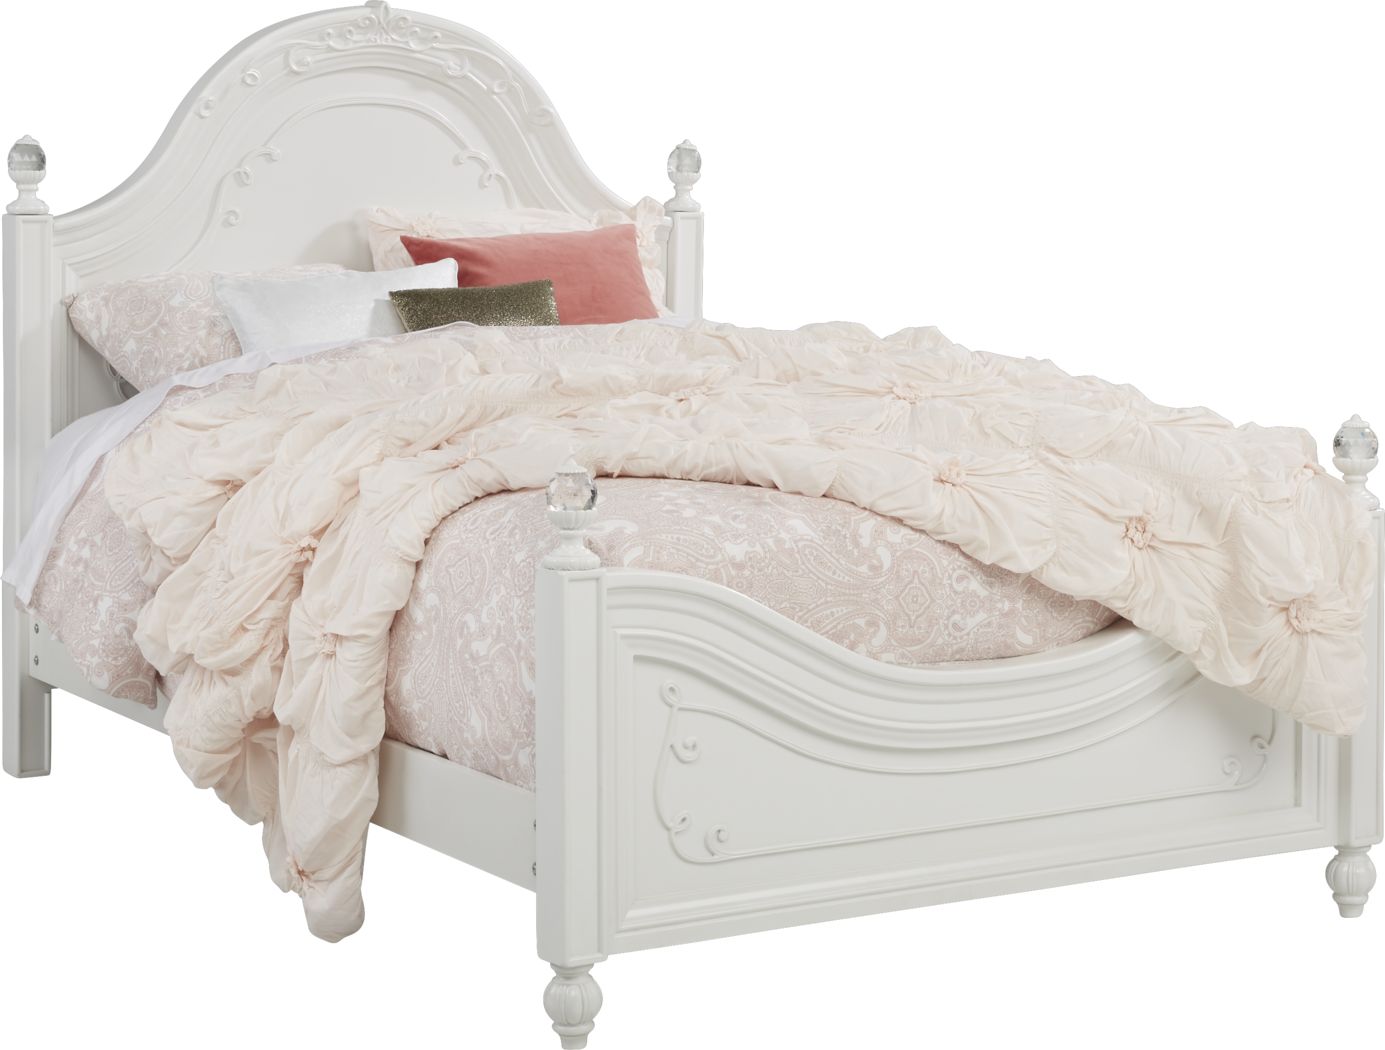 disney princess bed mattress